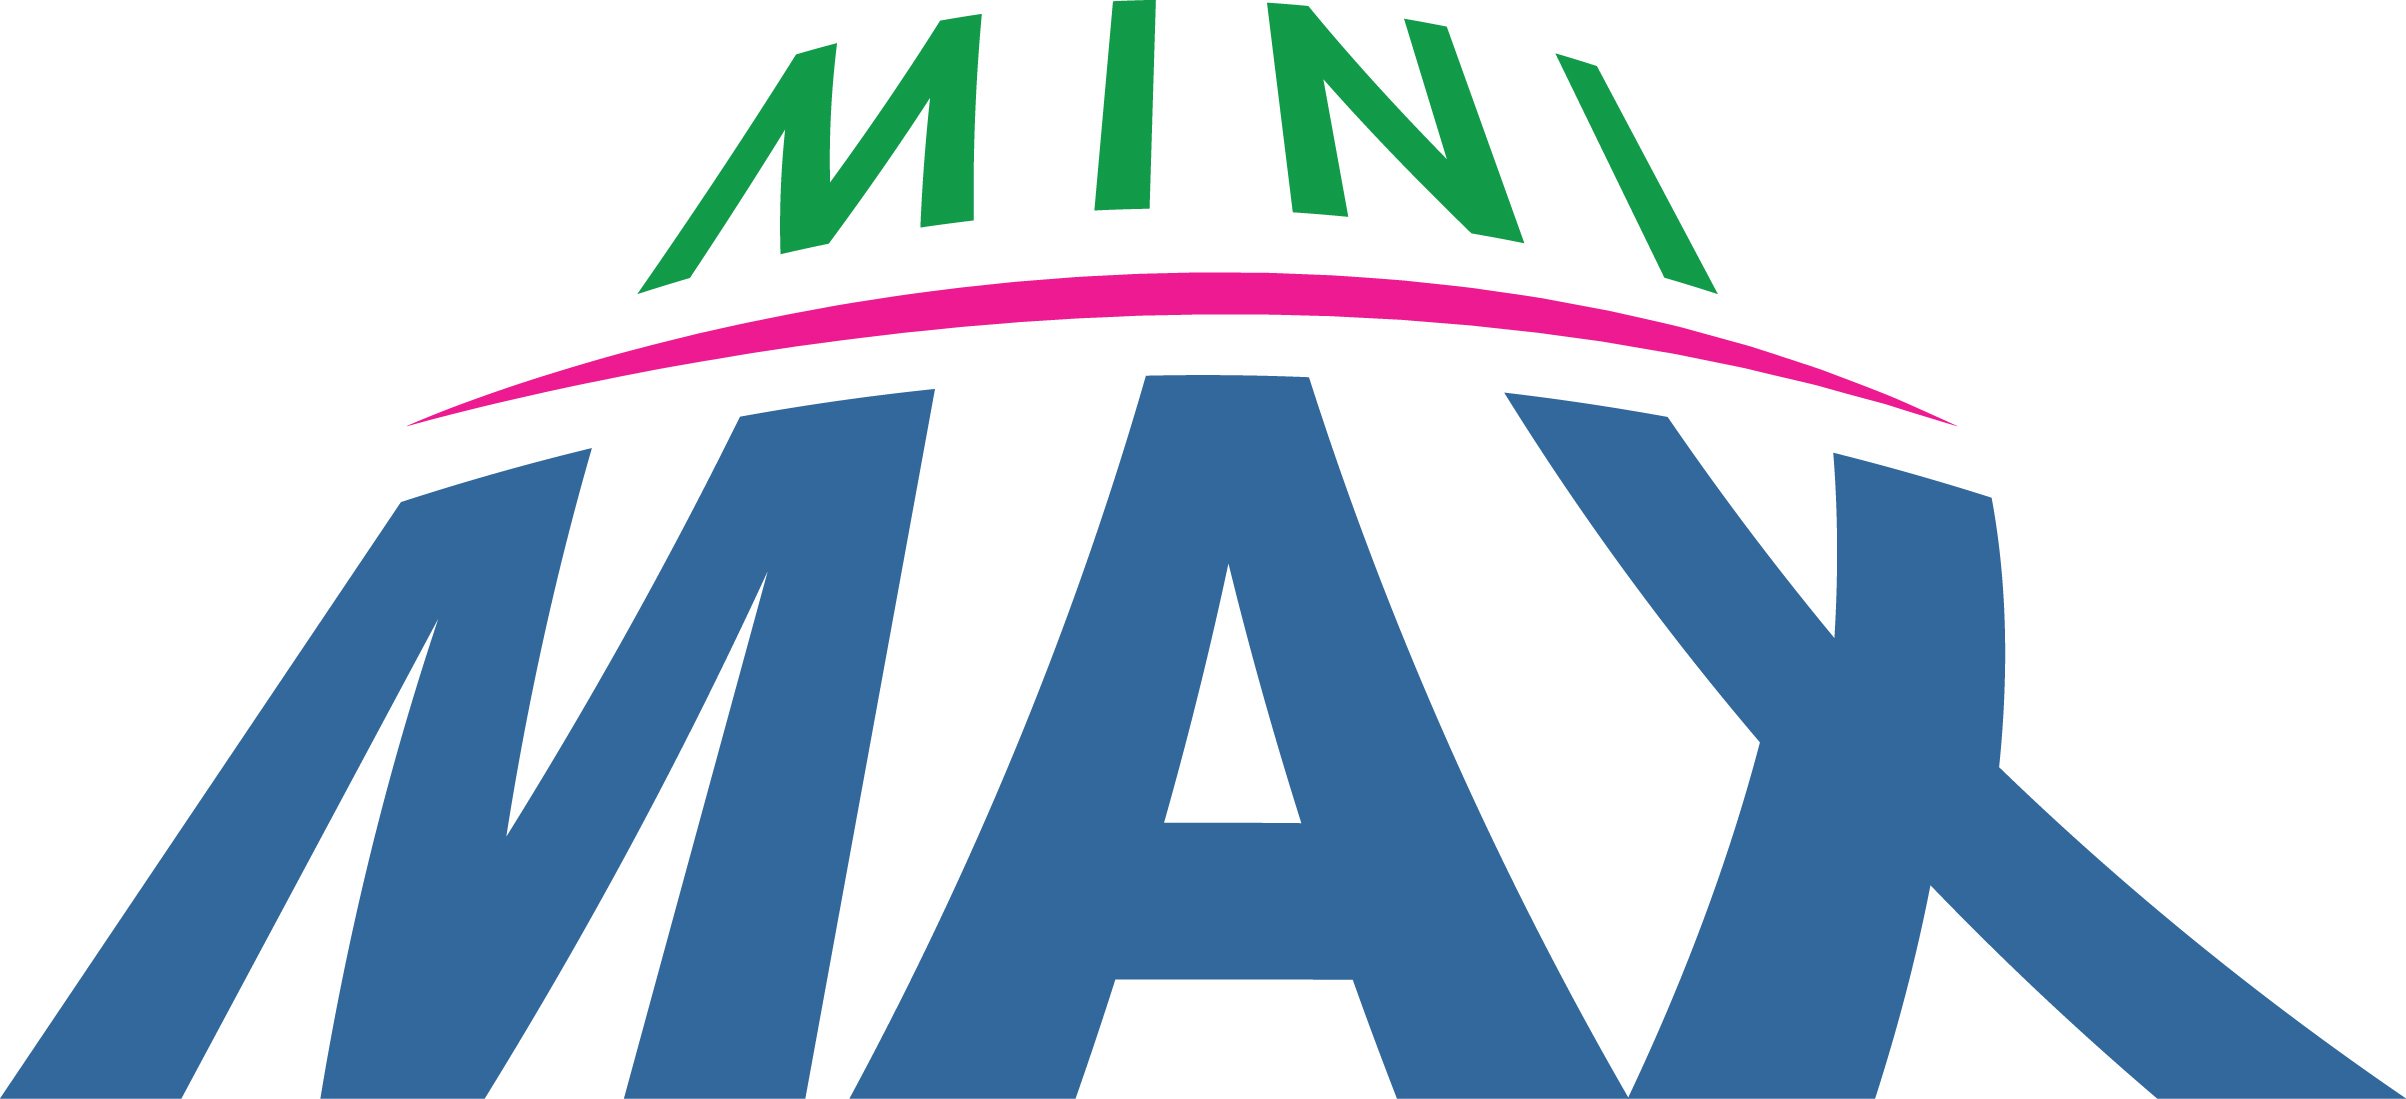 Trademark Logo MINI MAX